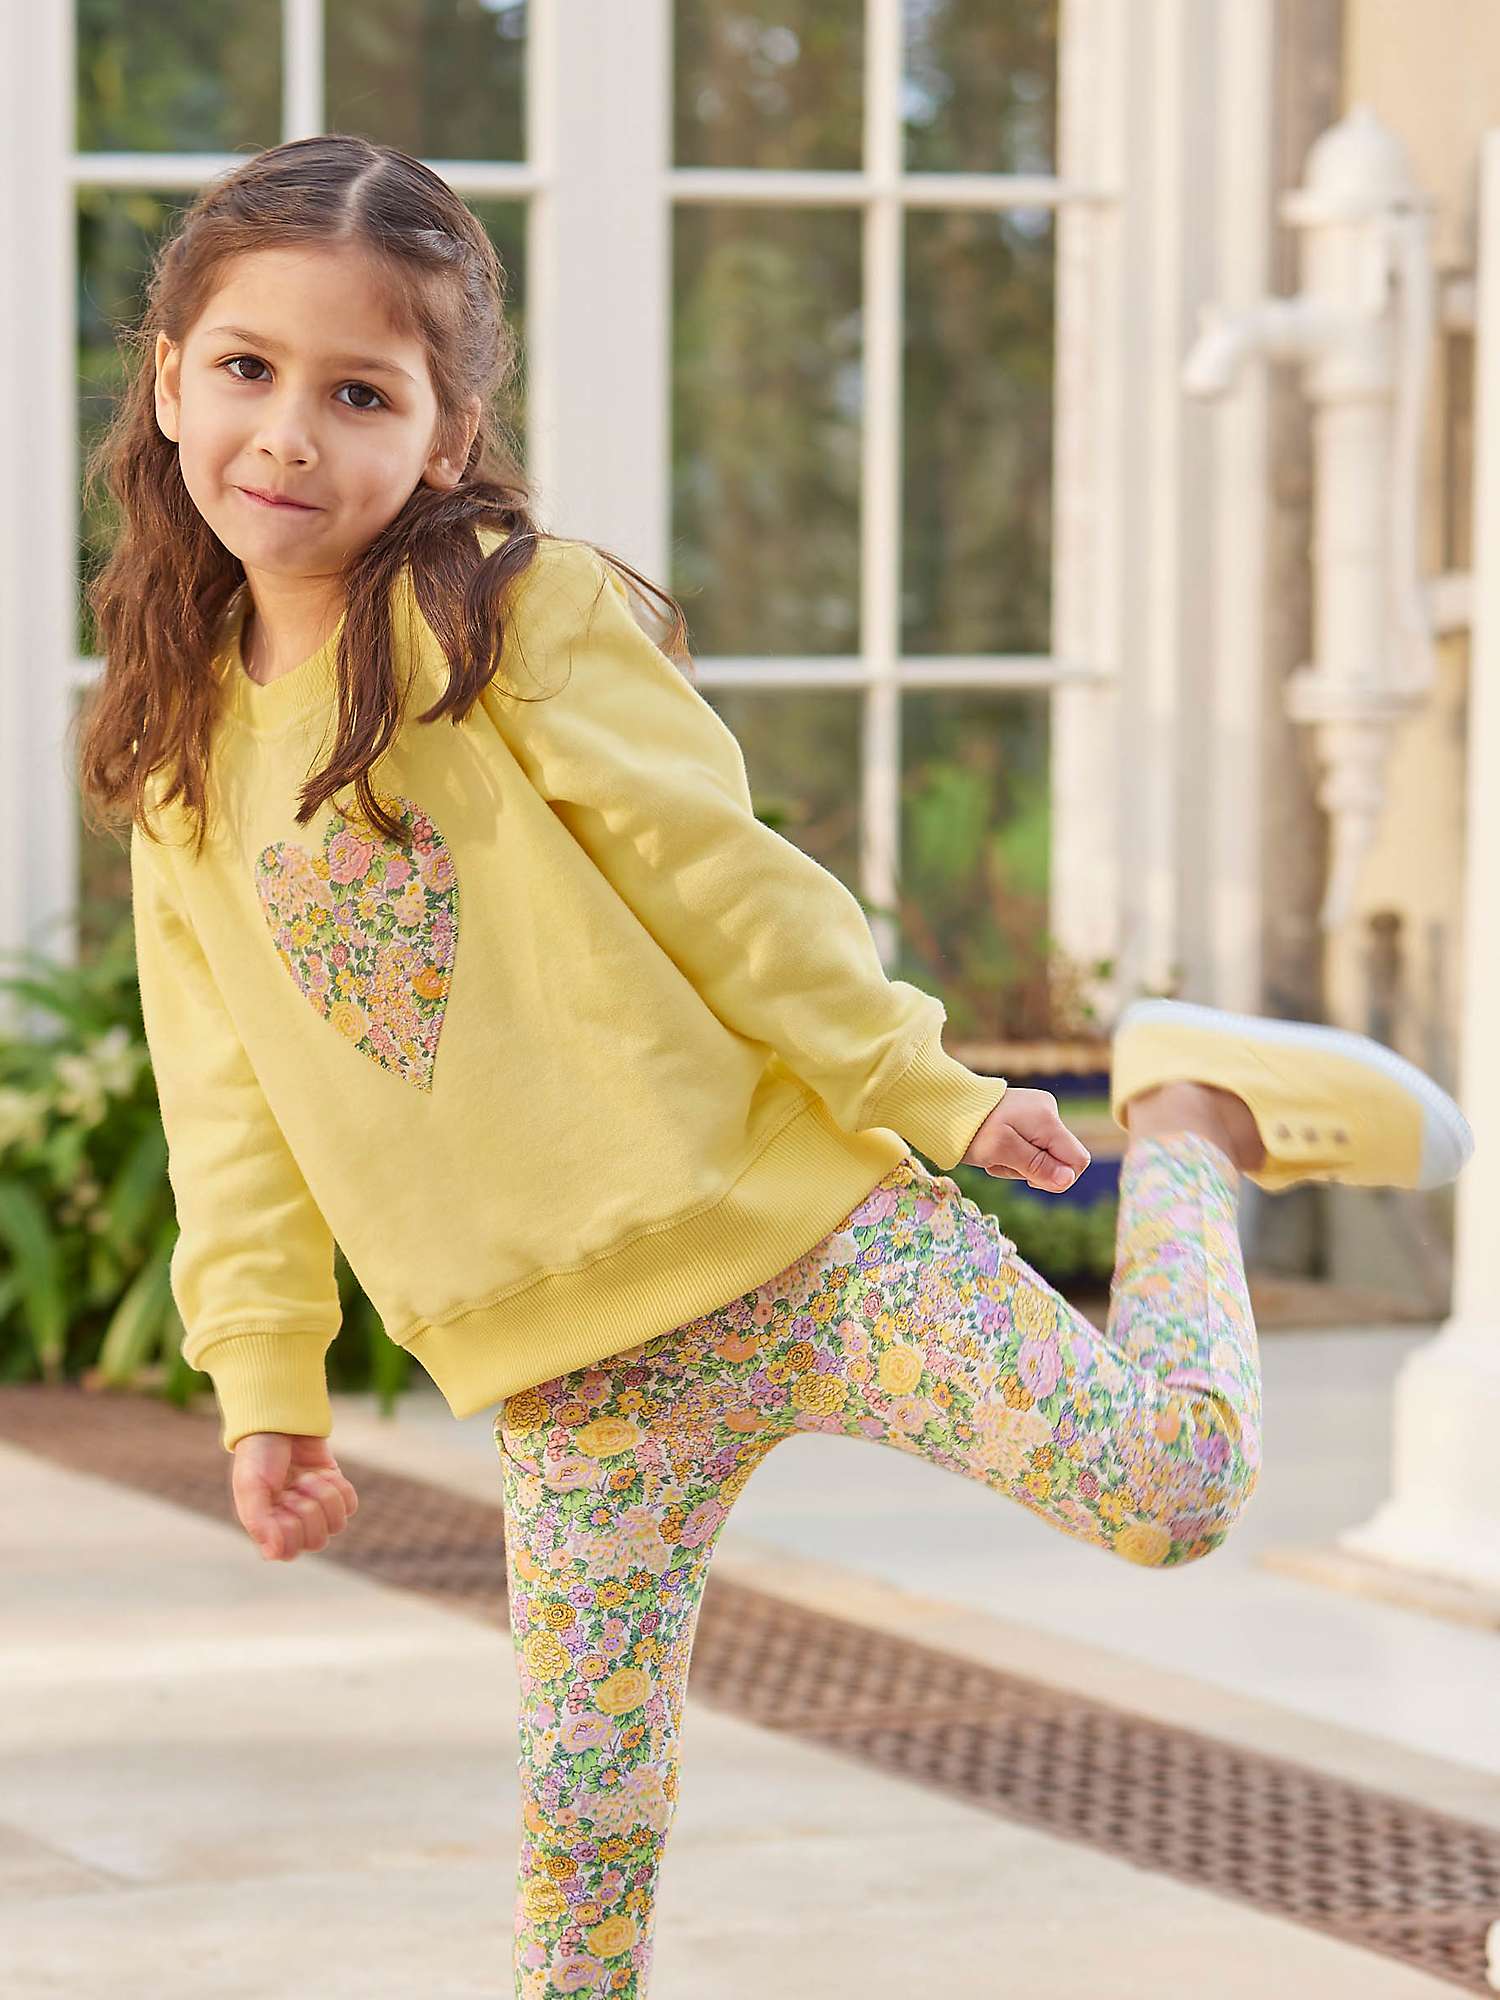 Buy Trotters Kids' Elysian Day Floral Heart Applique Sweatshirt, Lemon Online at johnlewis.com